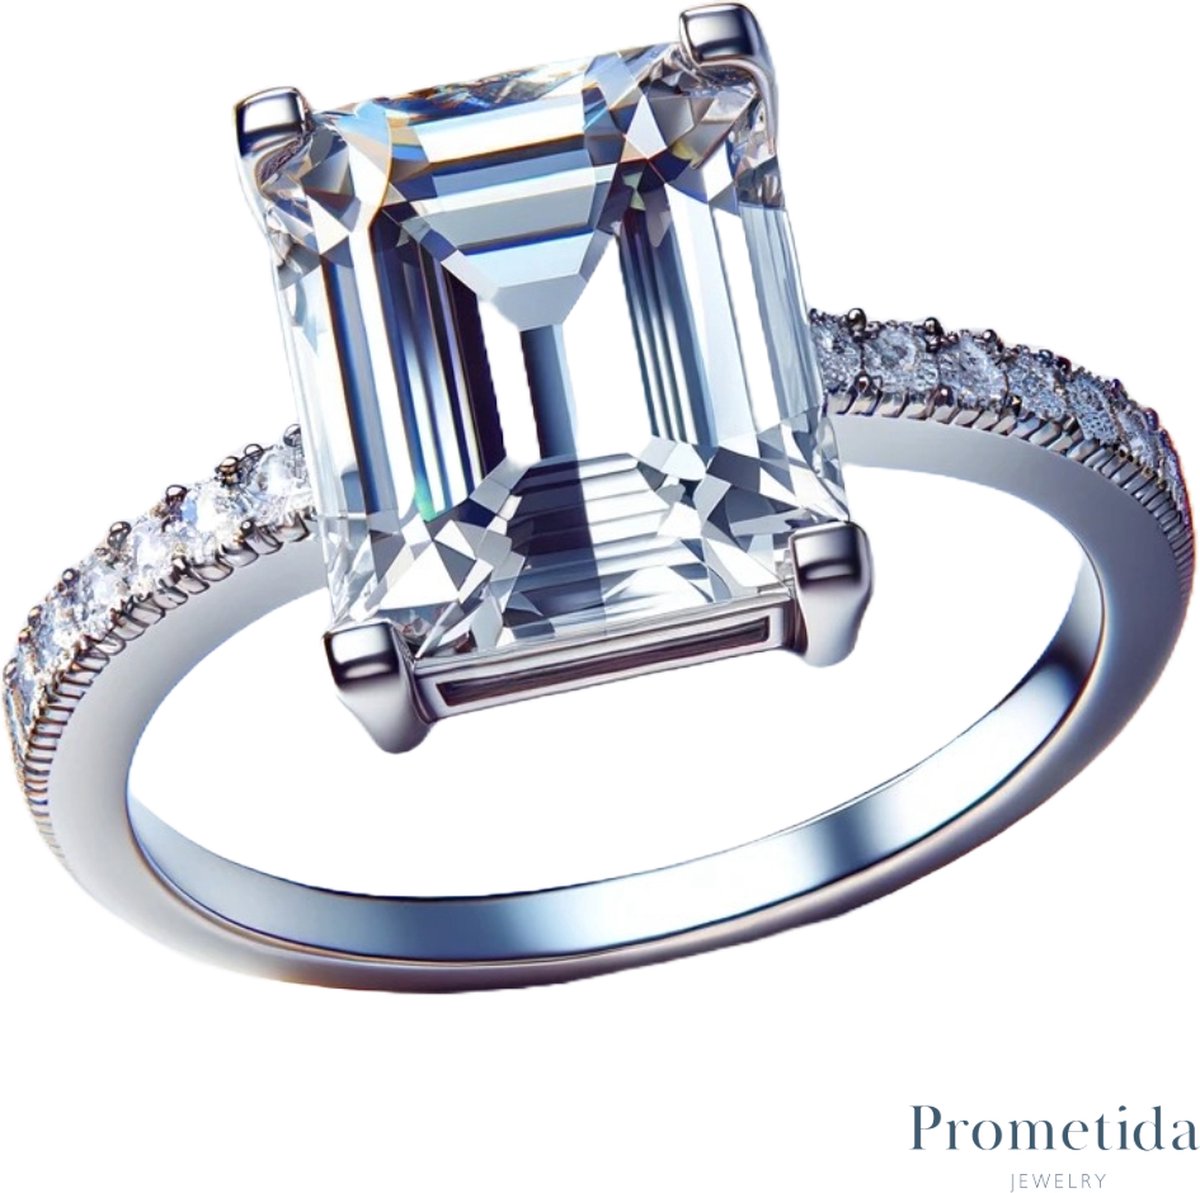 Prometida - Verlovingsring - Ringenset - Emerald-cut Solitair pavé -Zirkonia steen - Sterling Zilver 925 - Aanschuifring pavé in v-vorm - Uitgesproken ring